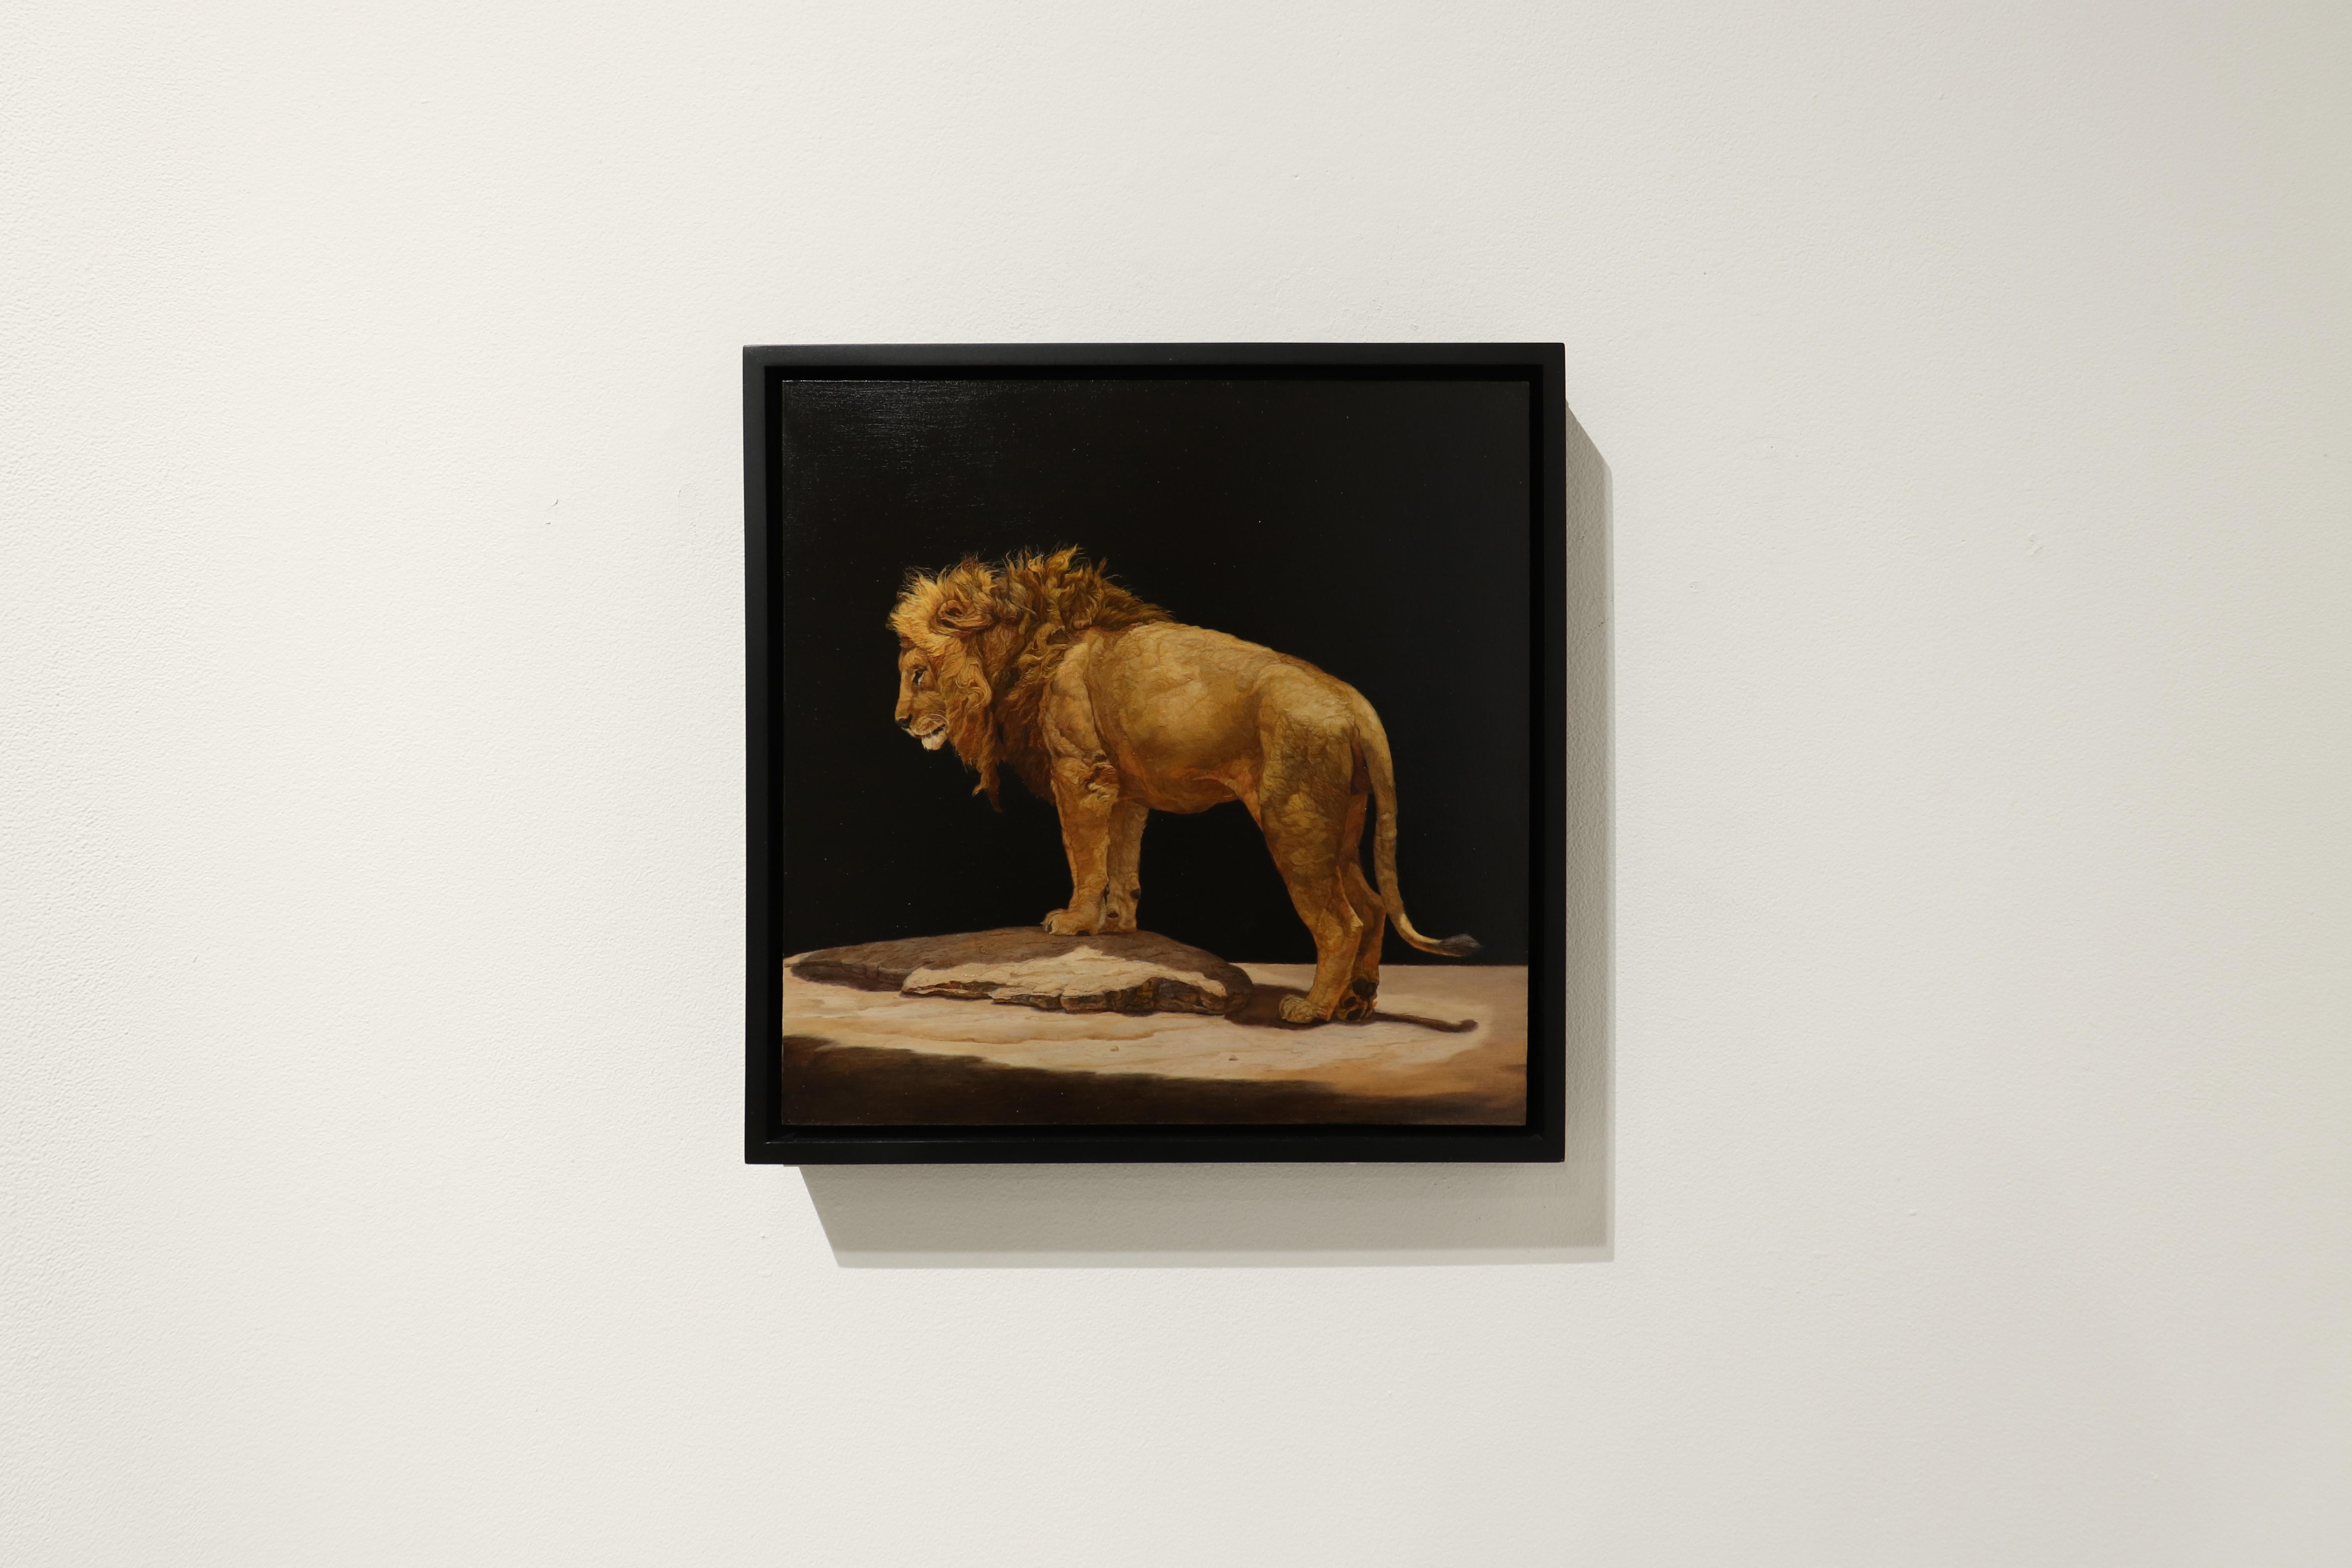 LION STANDING ON A KOPJES, Animal Portrait, Realism, Africa, Tanzania, Dark - Painting by Patricia Traub